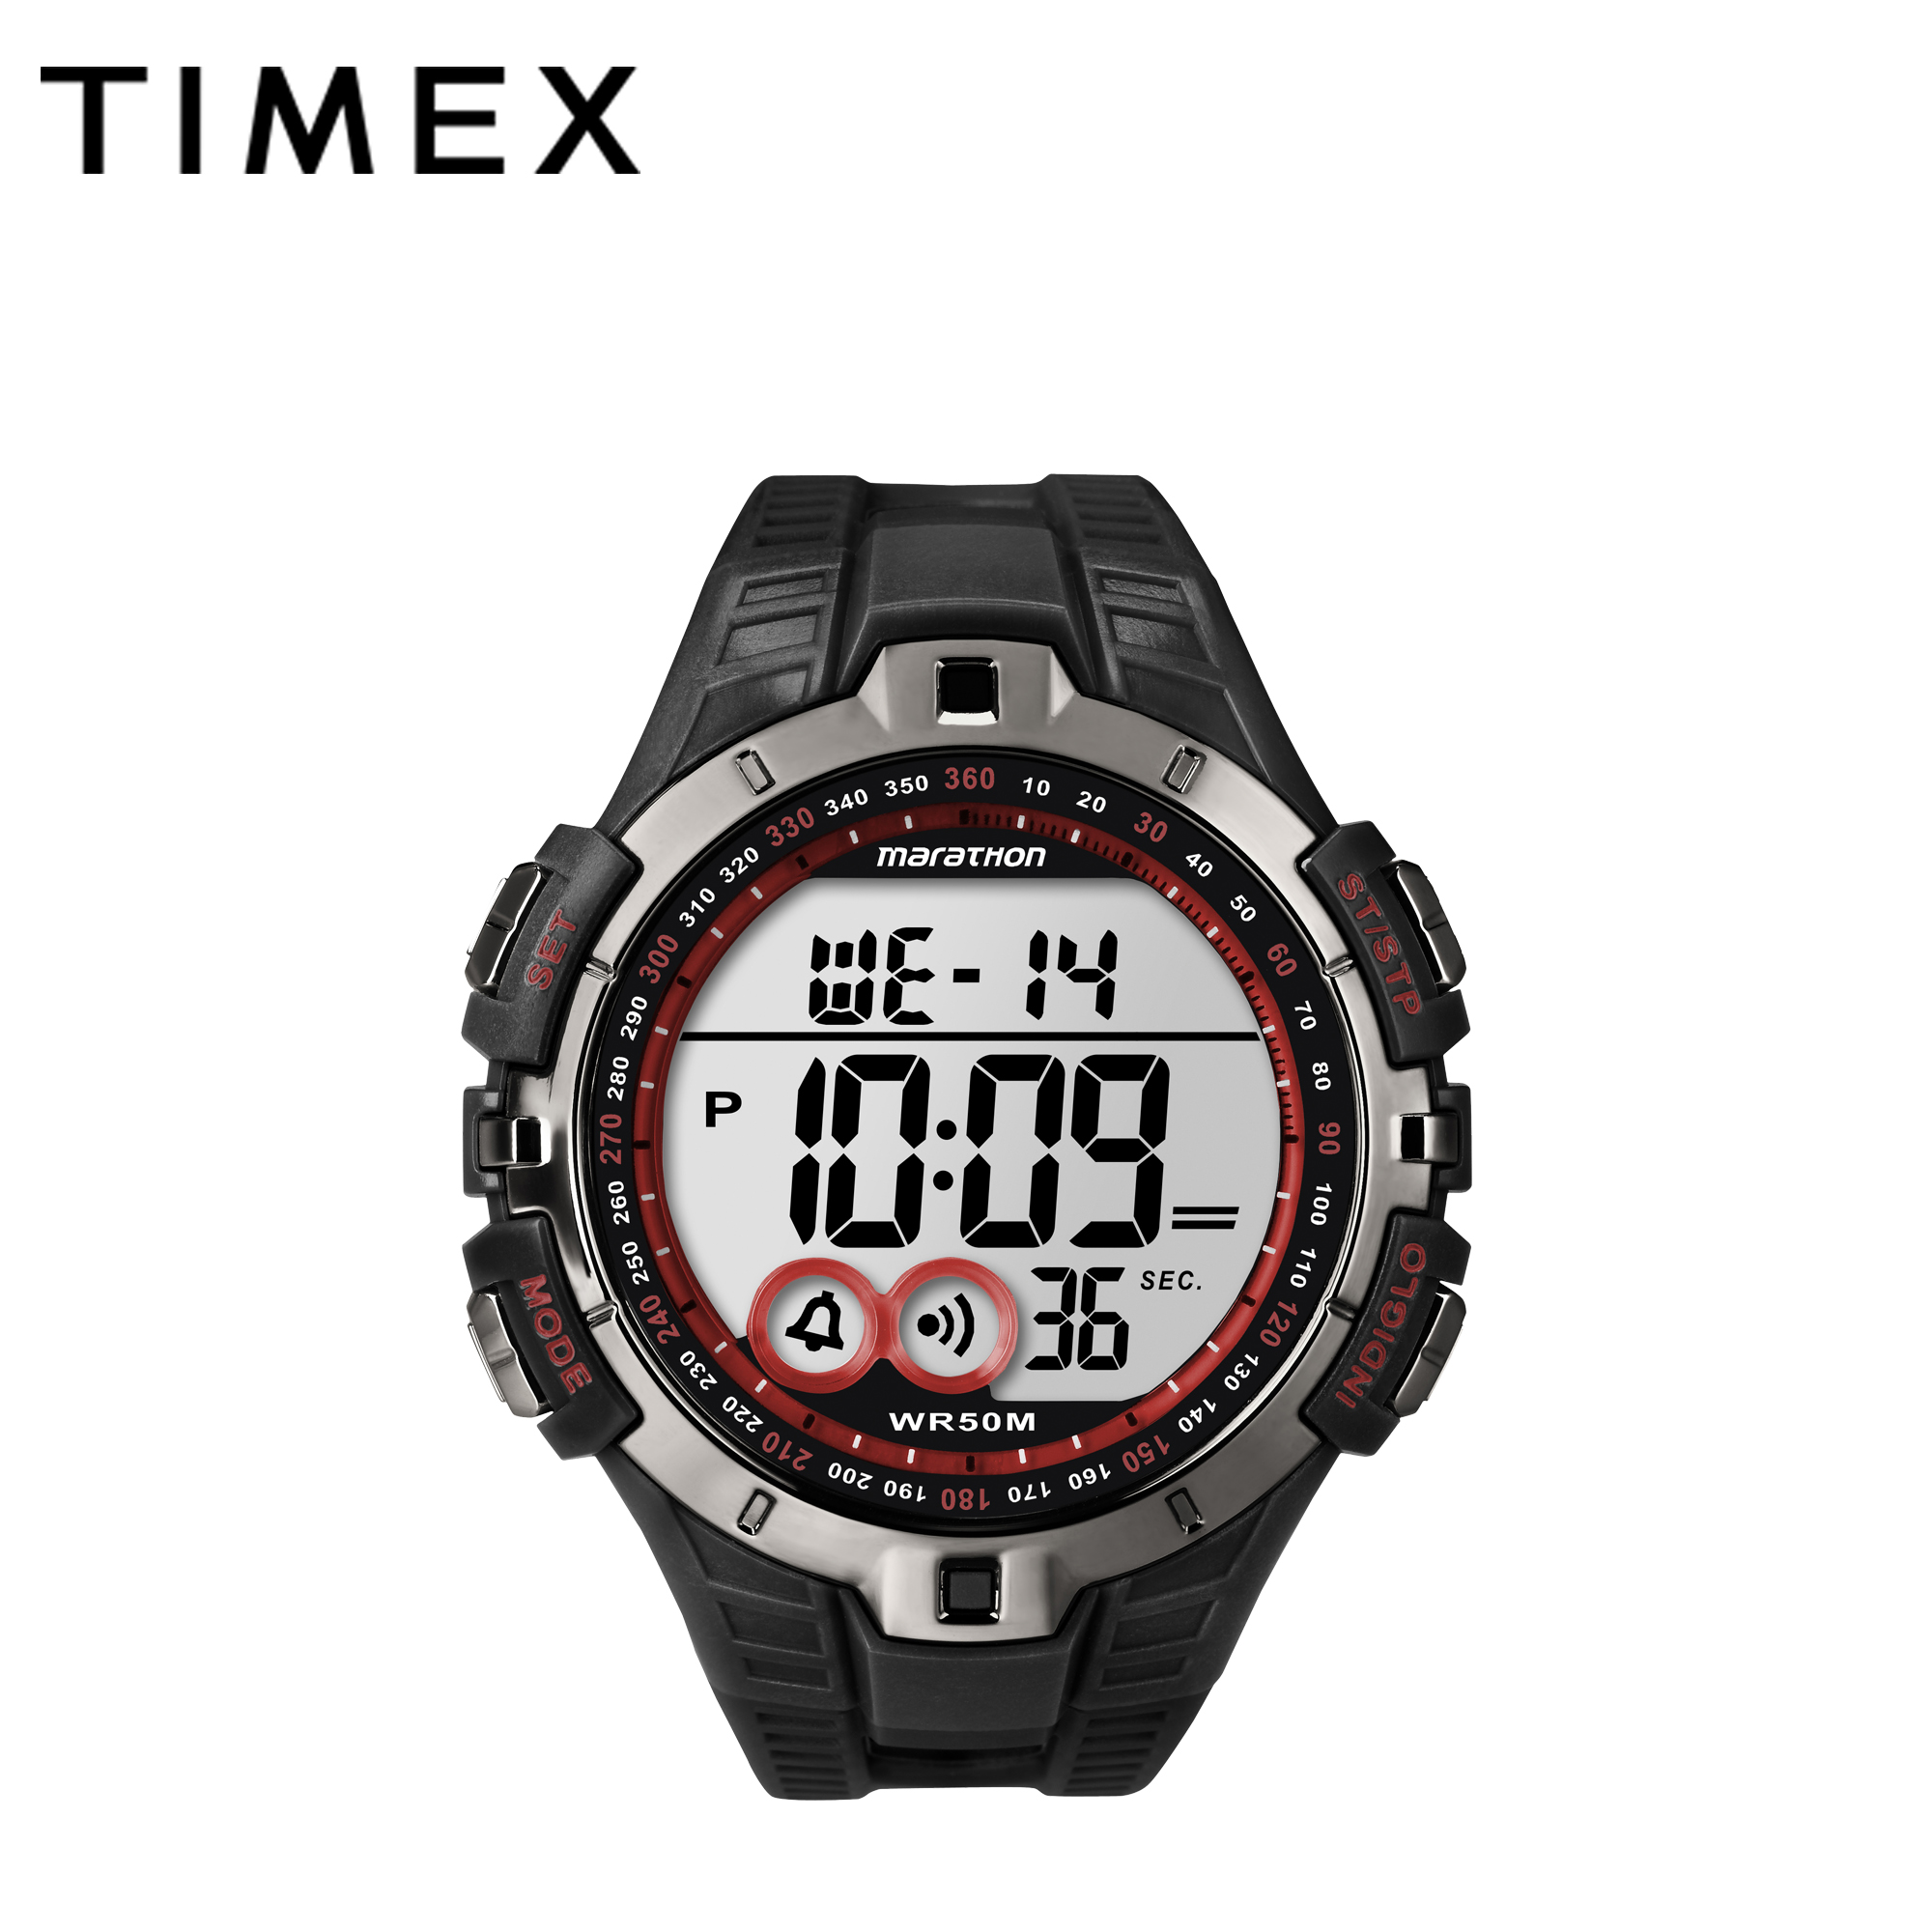 Timex Marathon Black Rubber Digital Watch For Men T5K423 SPORTS | Lazada PH